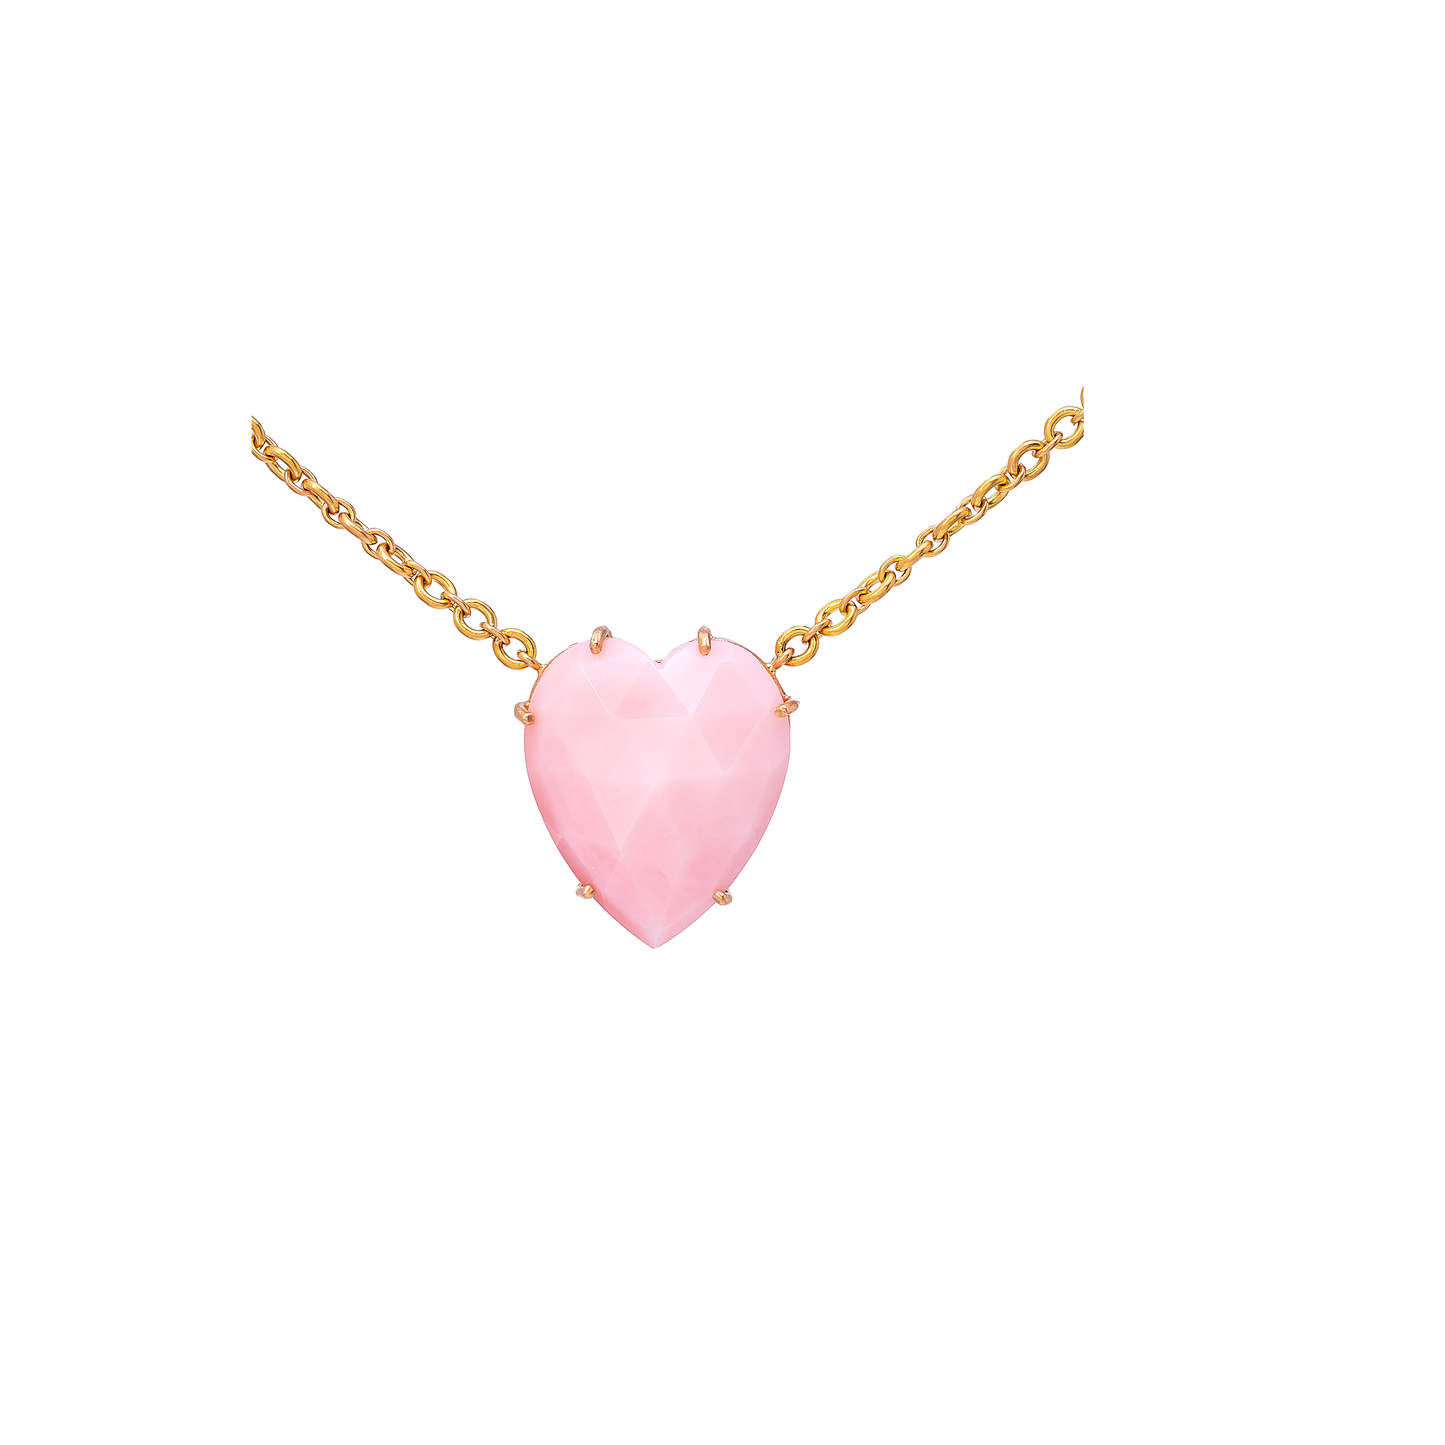 Irene Neuwirth 'Love' Heart Shape Pink Opal Necklace